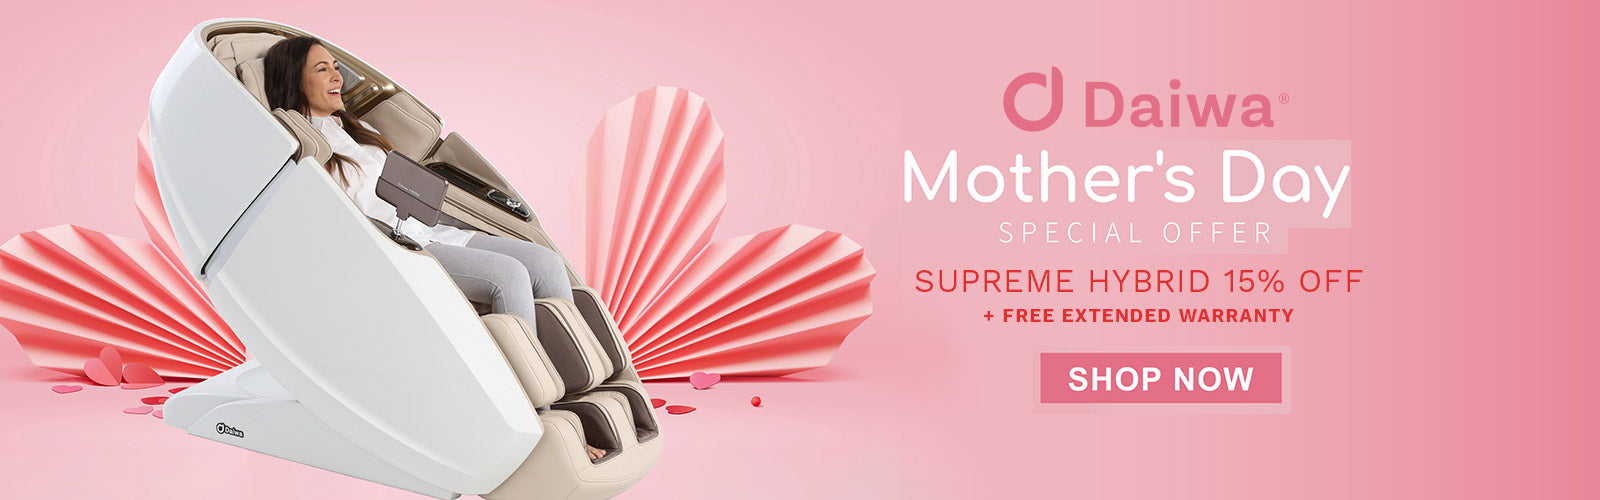 Daiwa Mother's Day Sale - SAVE 15% on the Supreme Hybrid